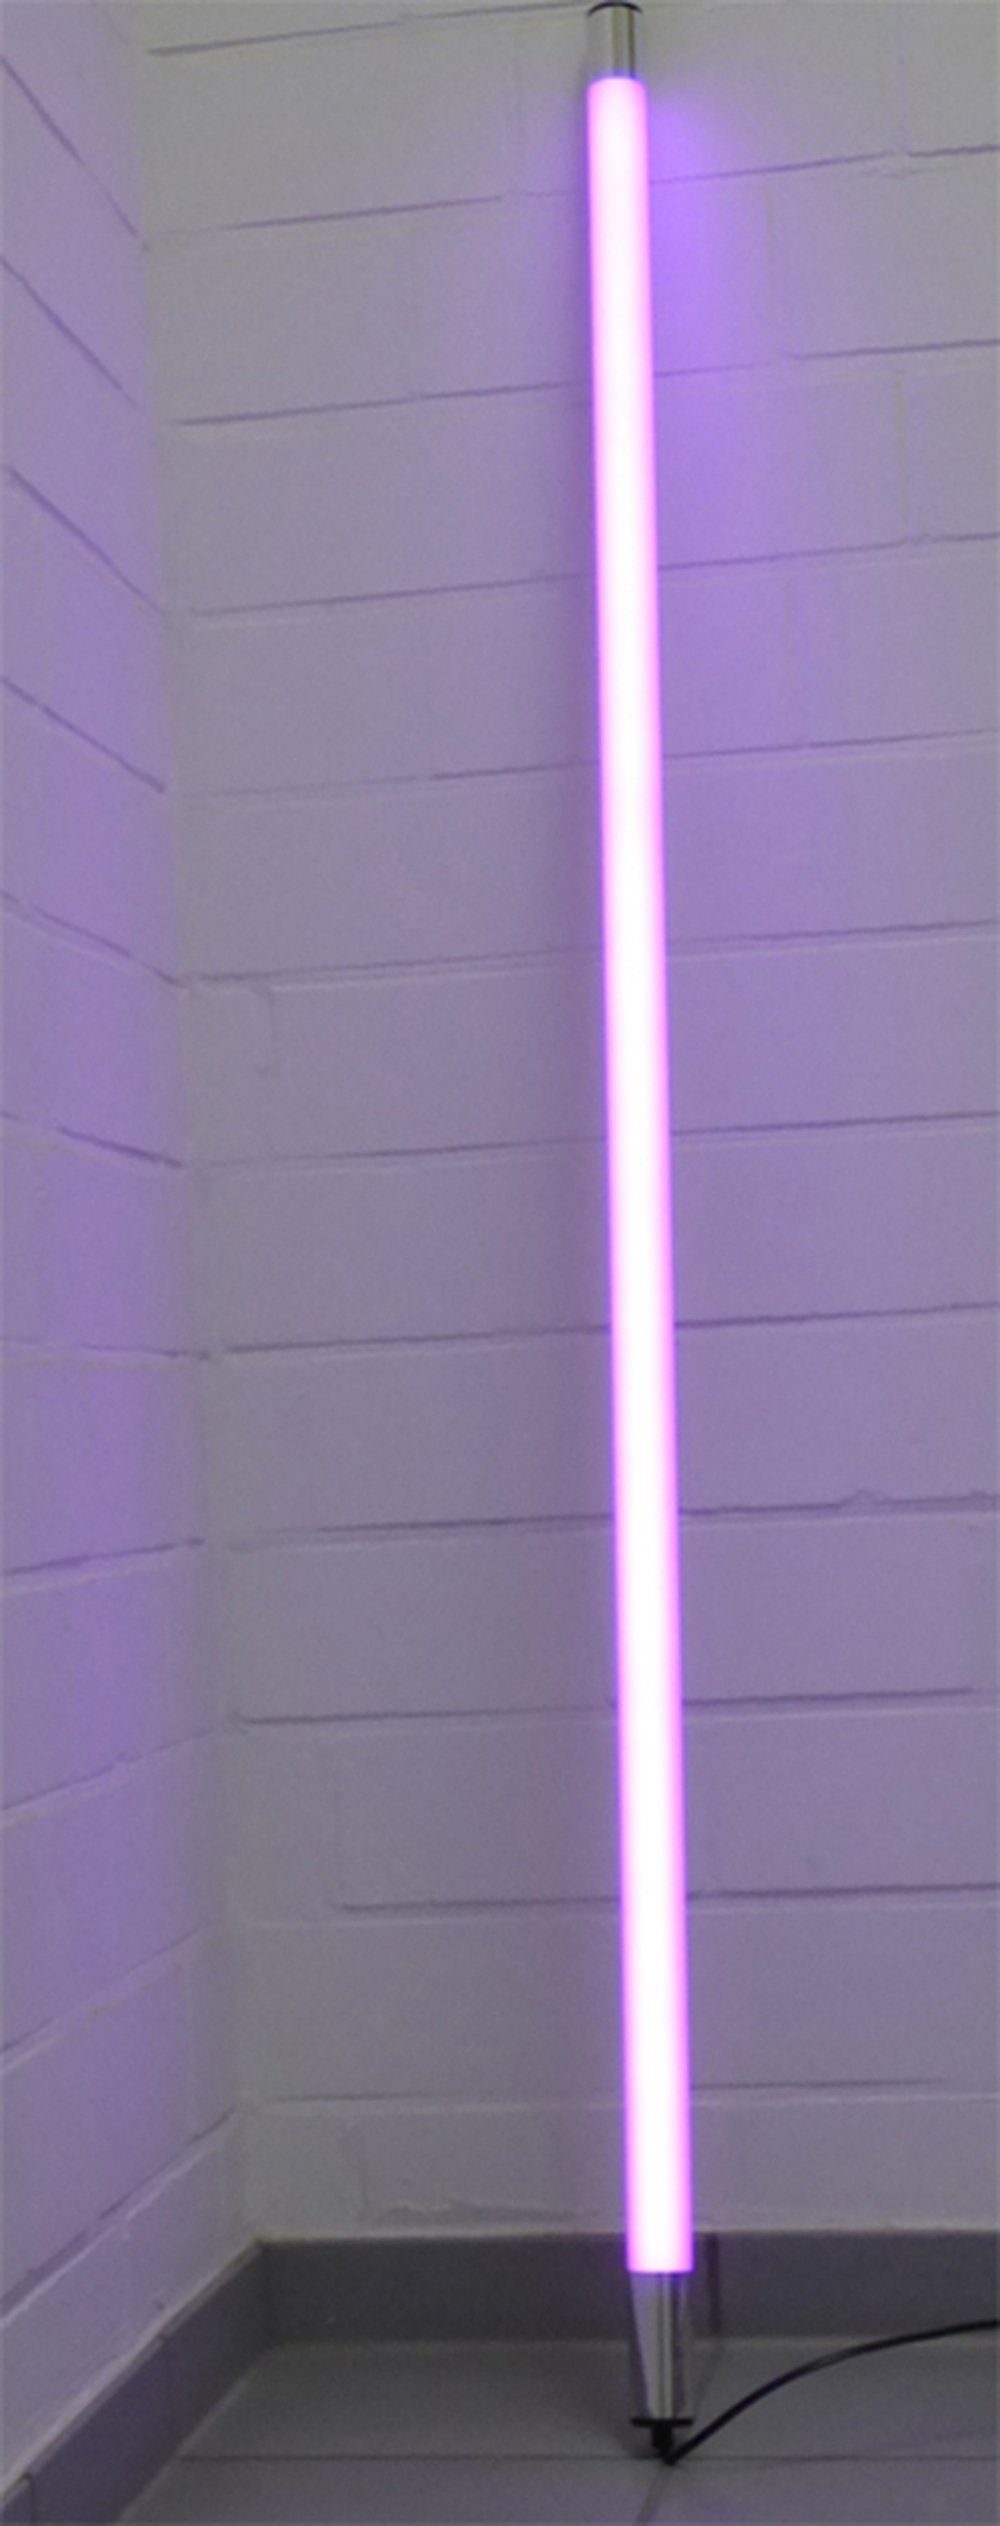 XENON LED Wandleuchte 6472 LED Leuchtstab Satiniert 1,23m Länge 1700 Lm IP20 Innen Violett, LED, Xenon